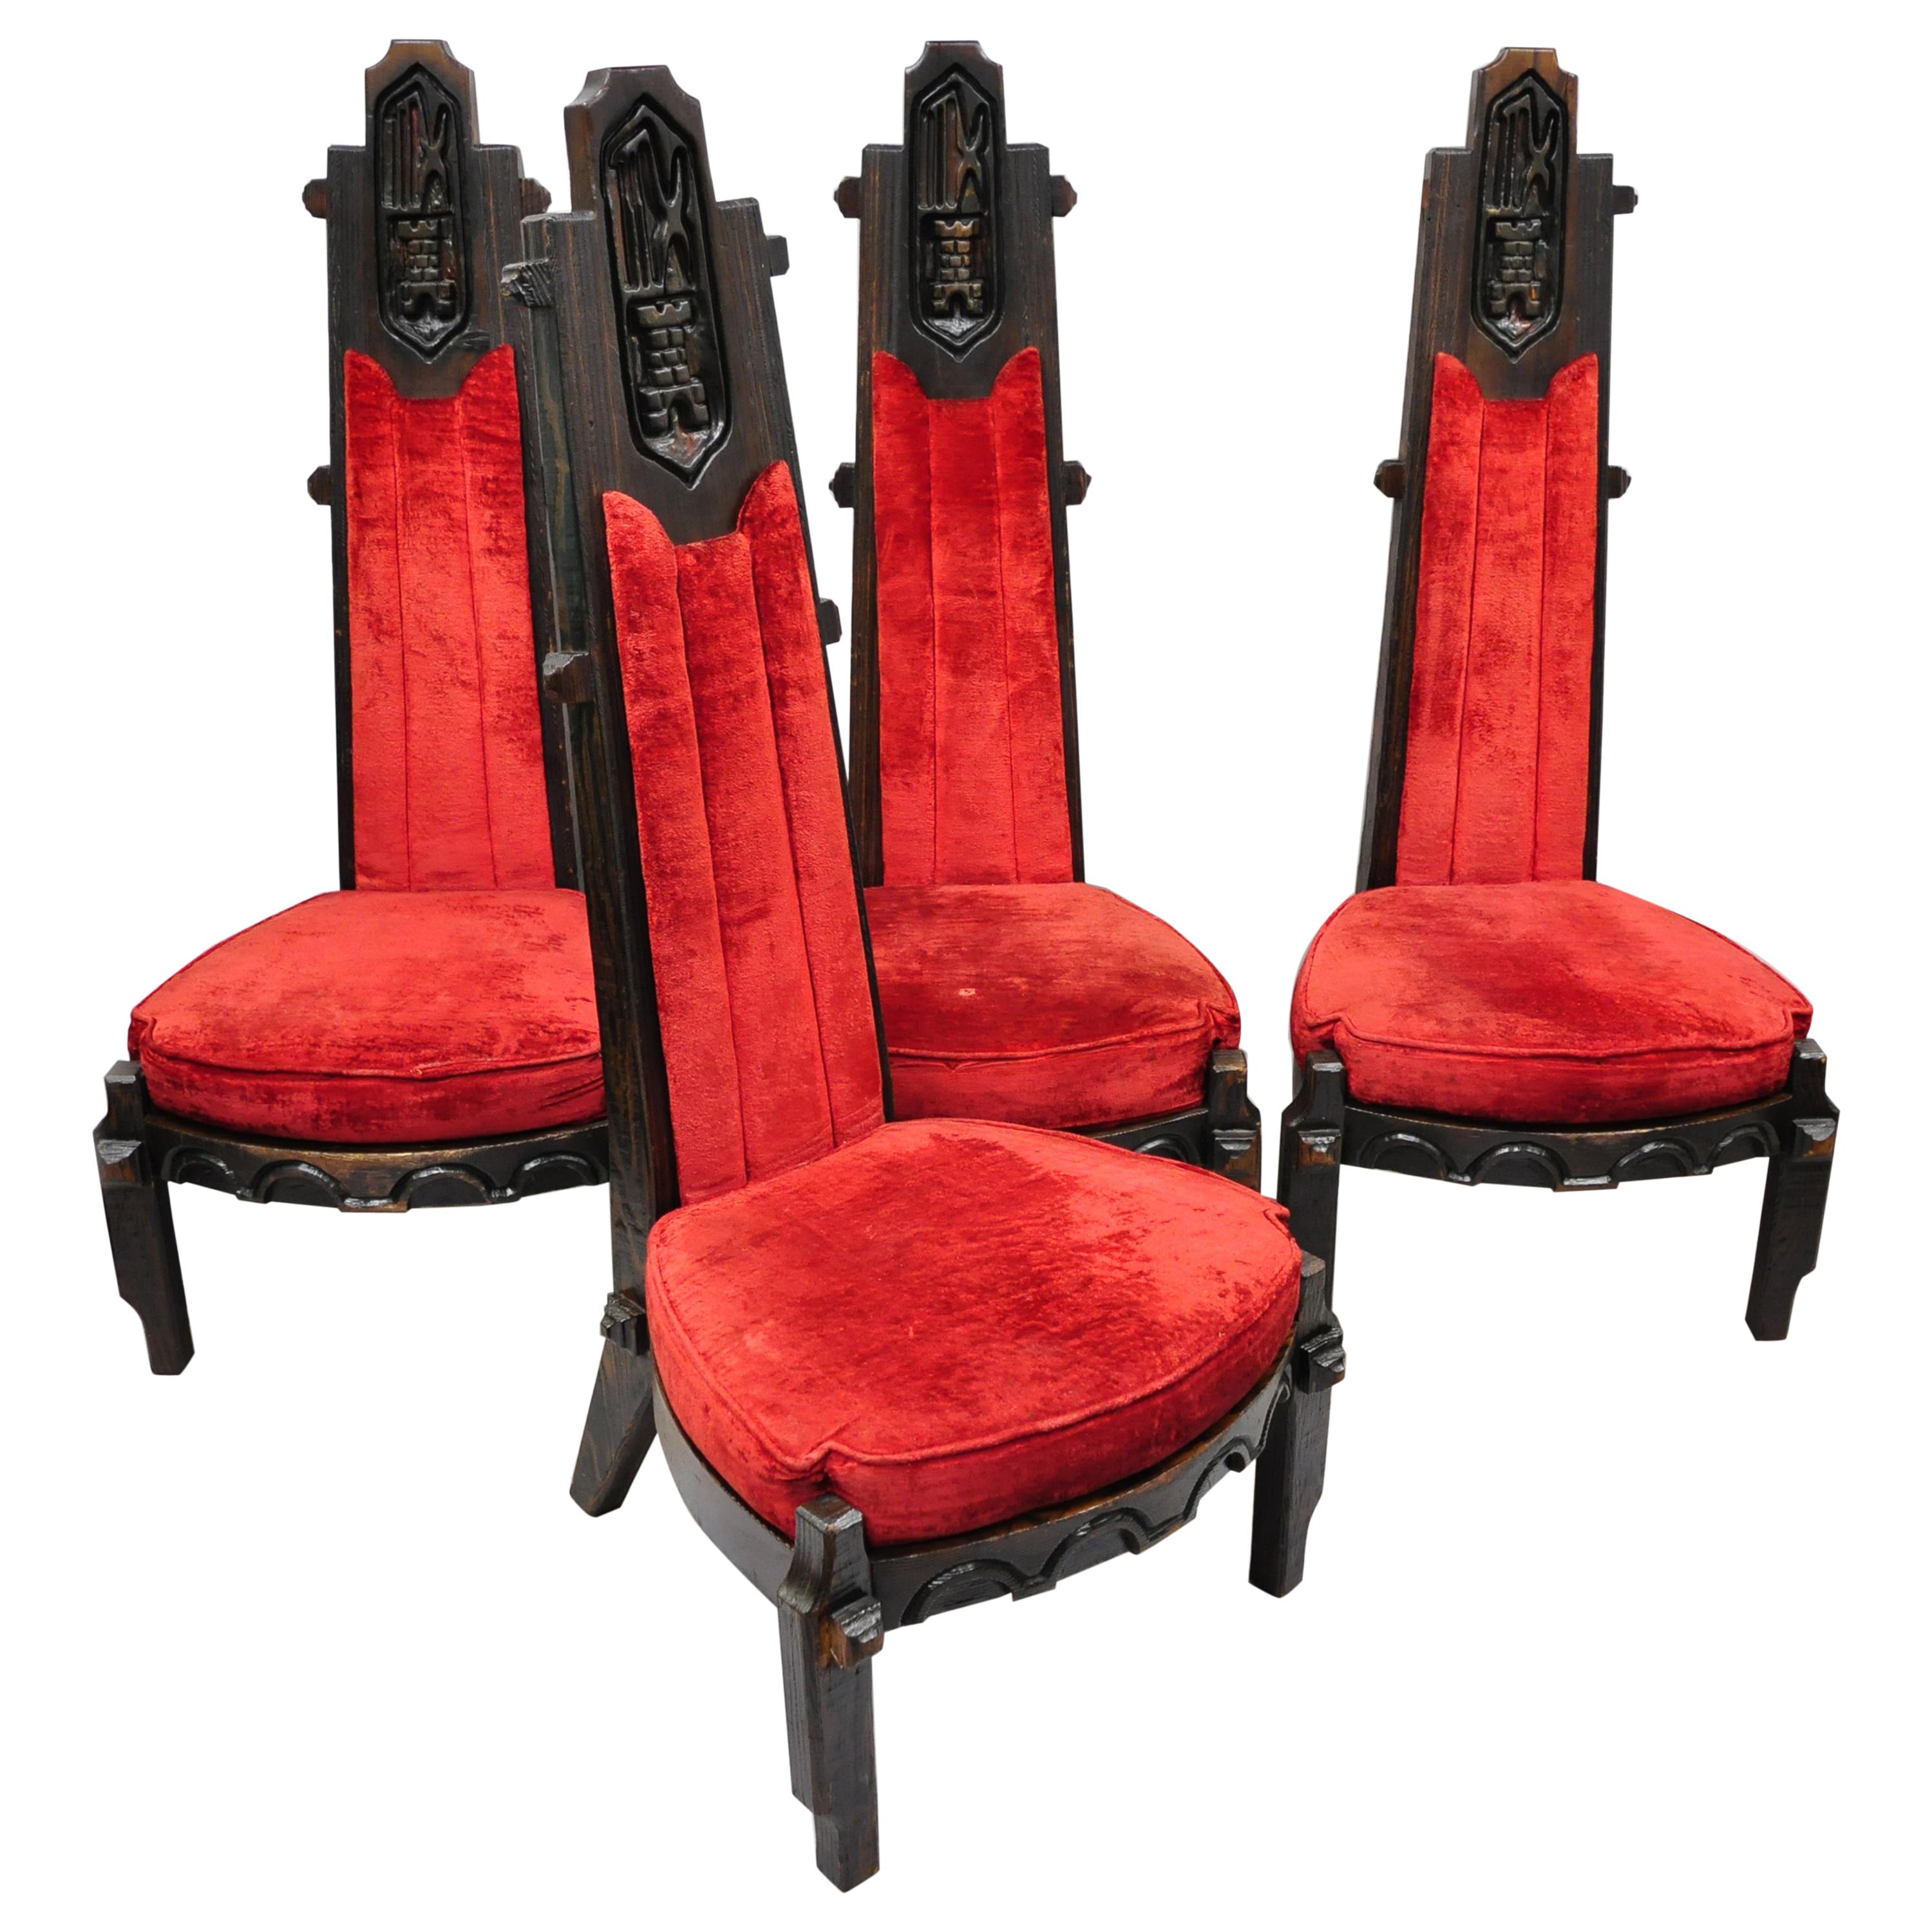 Maderas De Santa Barbara Gothic Revival Jungle Room Dining Chairs, Set of 4